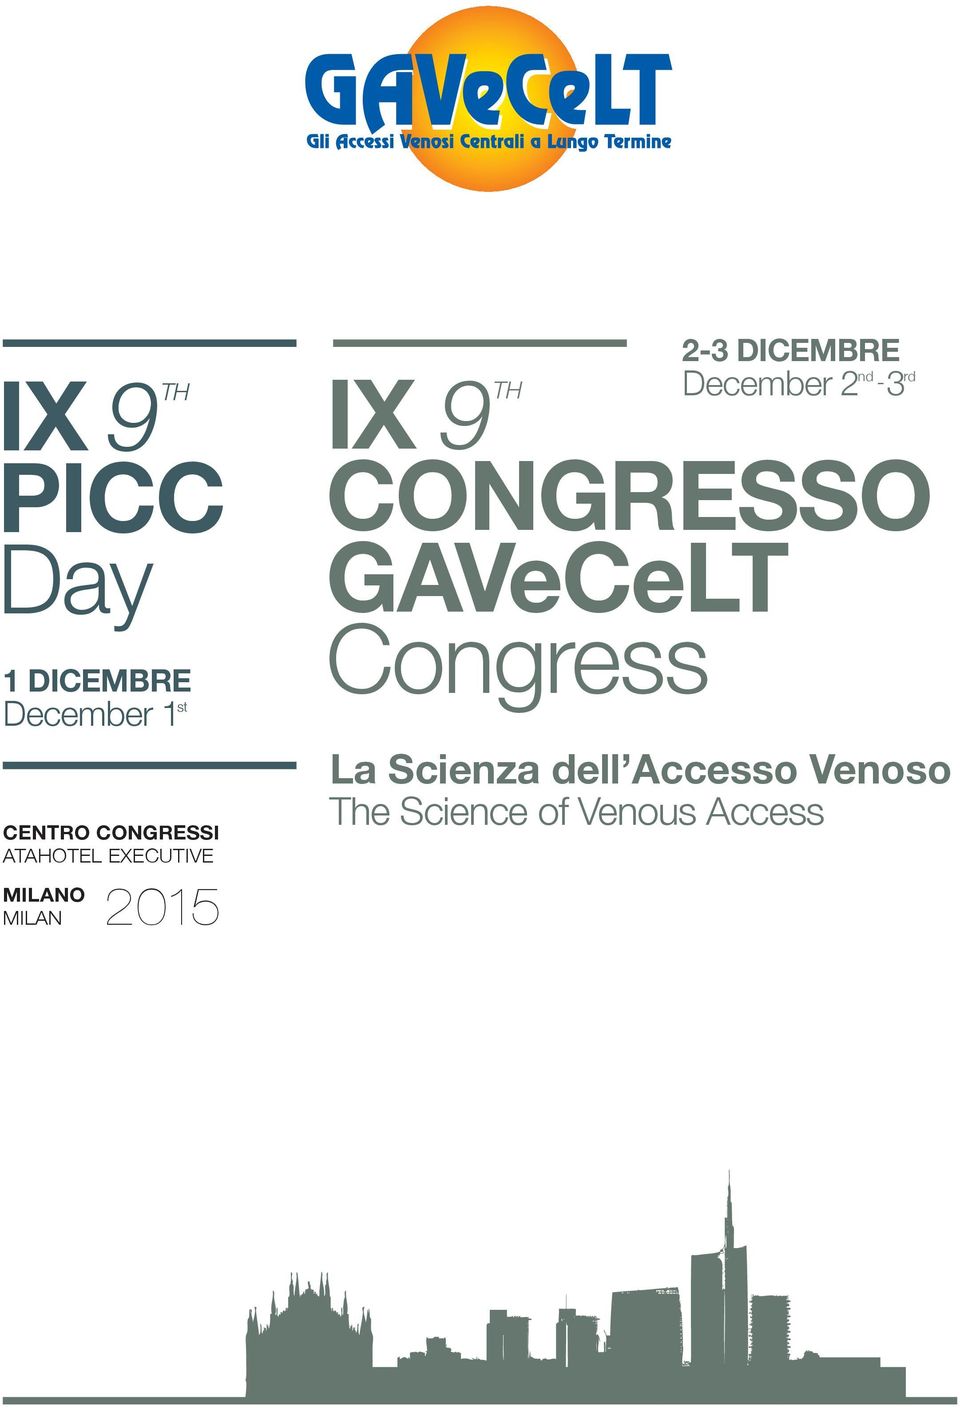 CONGRESSO GAVeCeLT Congress 9TH 2-3 DICEMBRE December 2